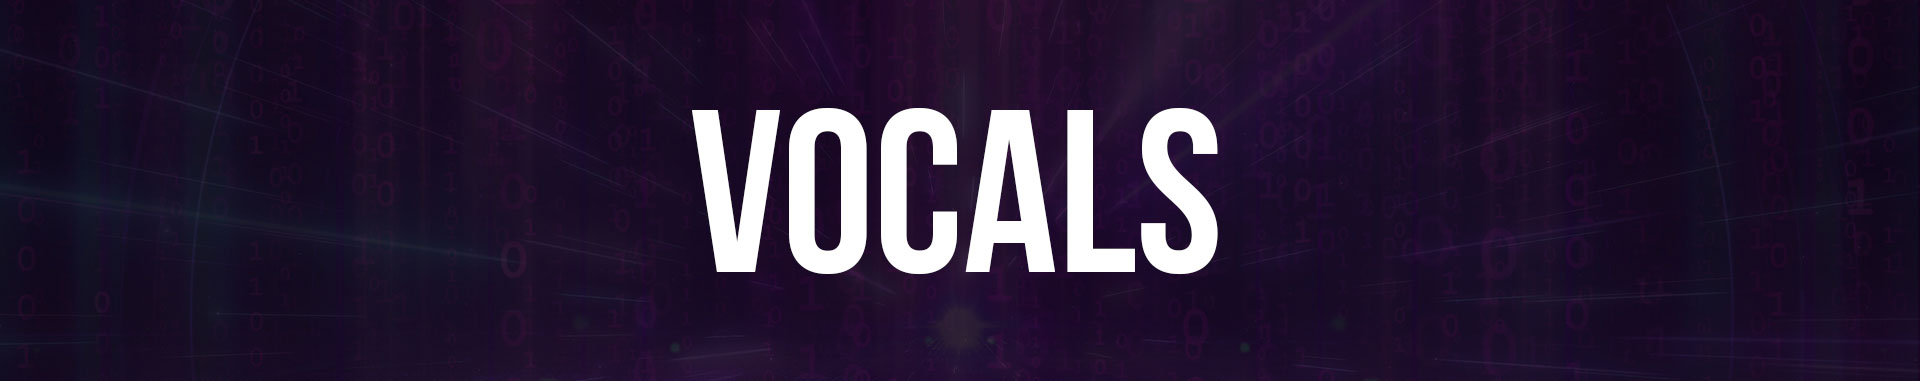 vocal recording tutorials and how to mix vocals